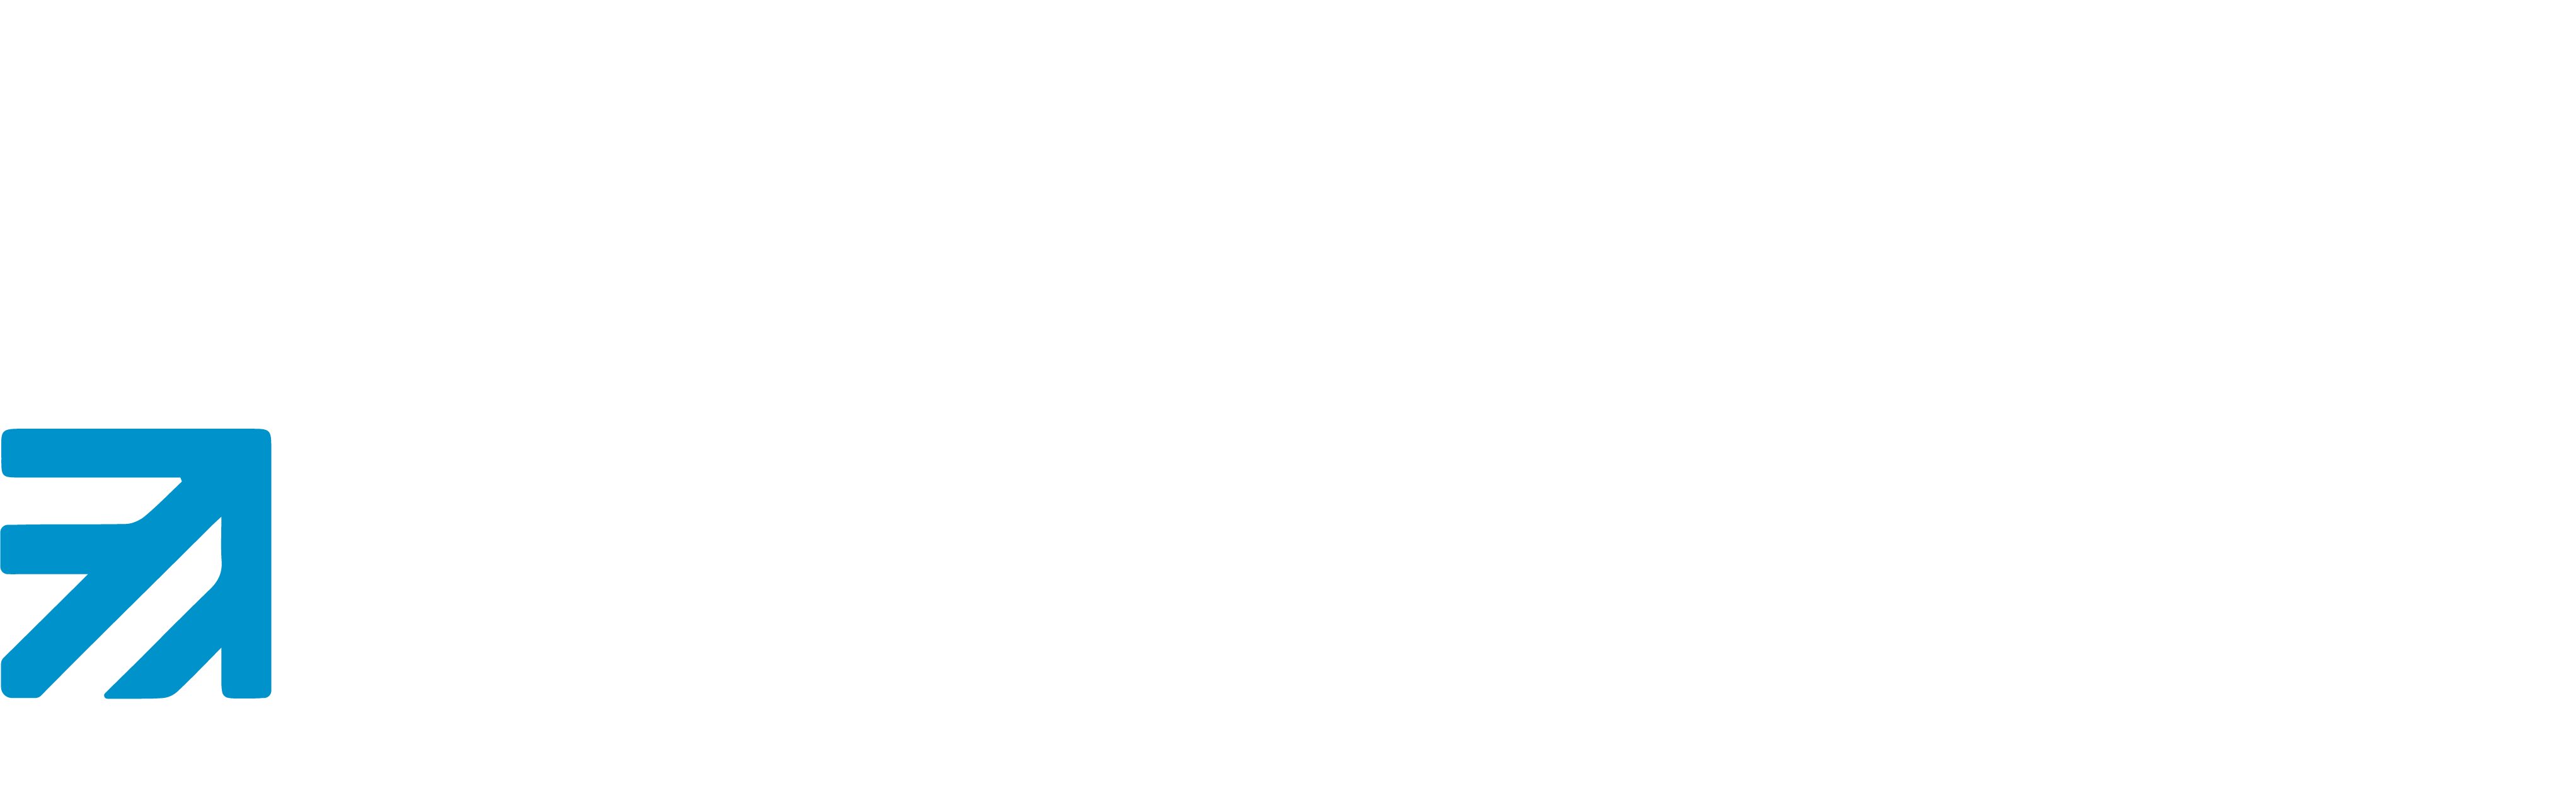 southwestern_rail_logo